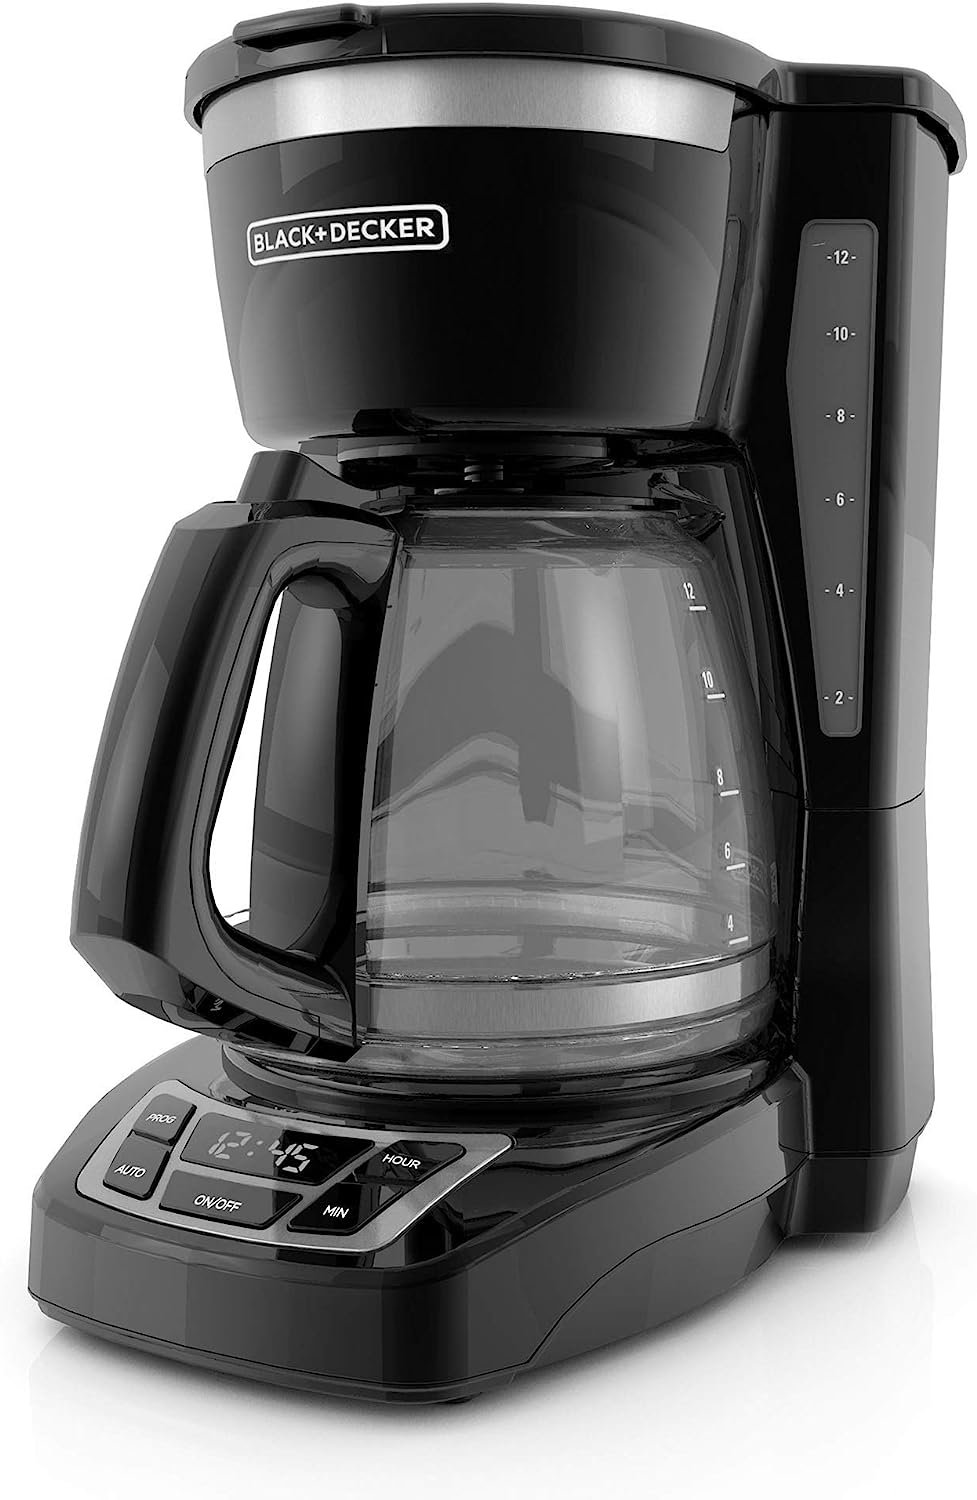 Black+Decker CM1160B 12-Cup Programmable Coffee Maker review